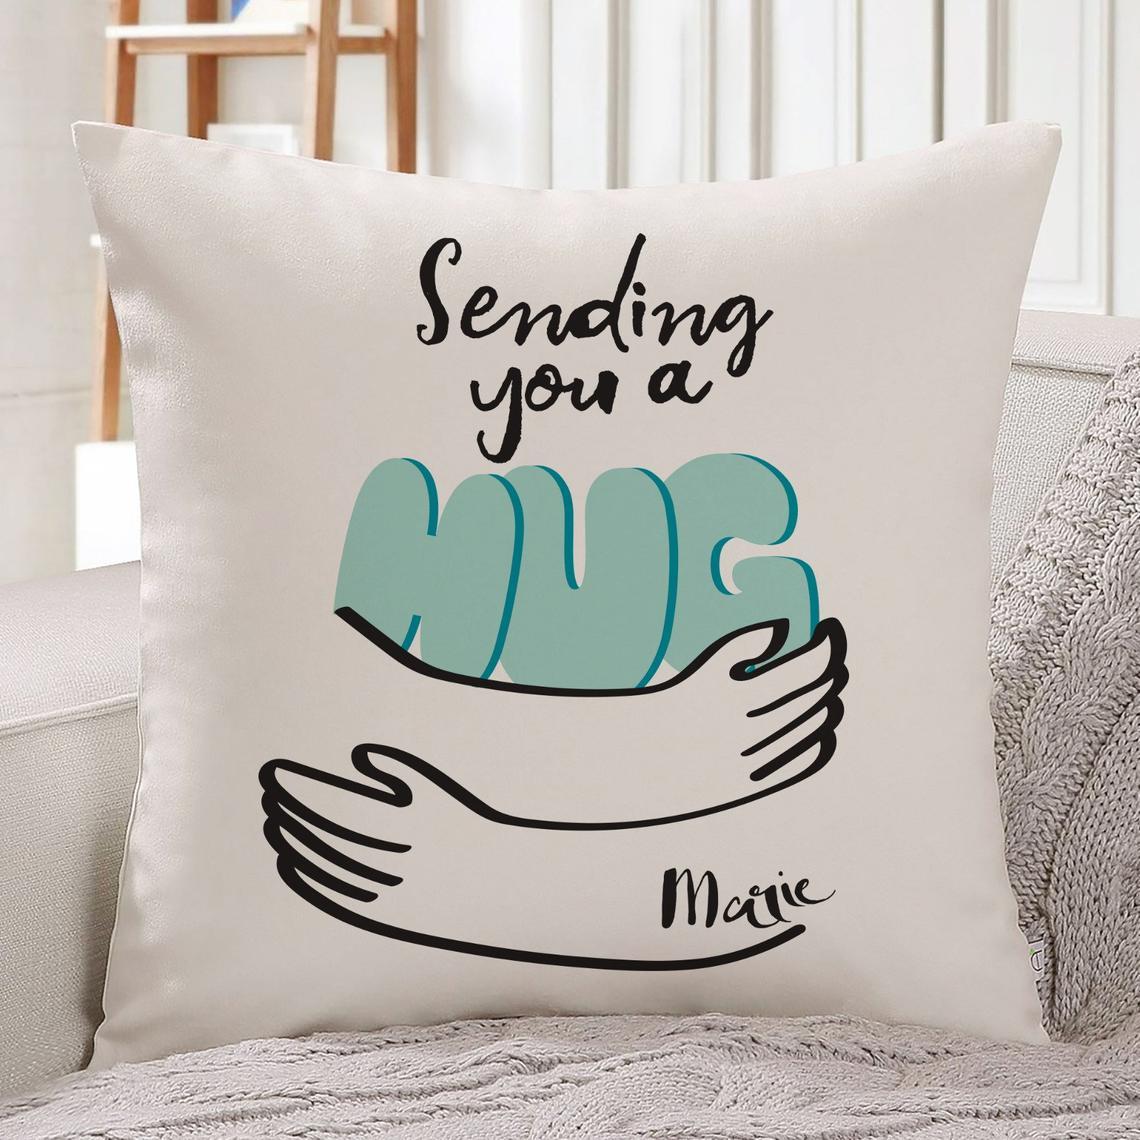 Sending you a hug cushion cover, Friends, soul sisters, auntie, grandma, mum gif